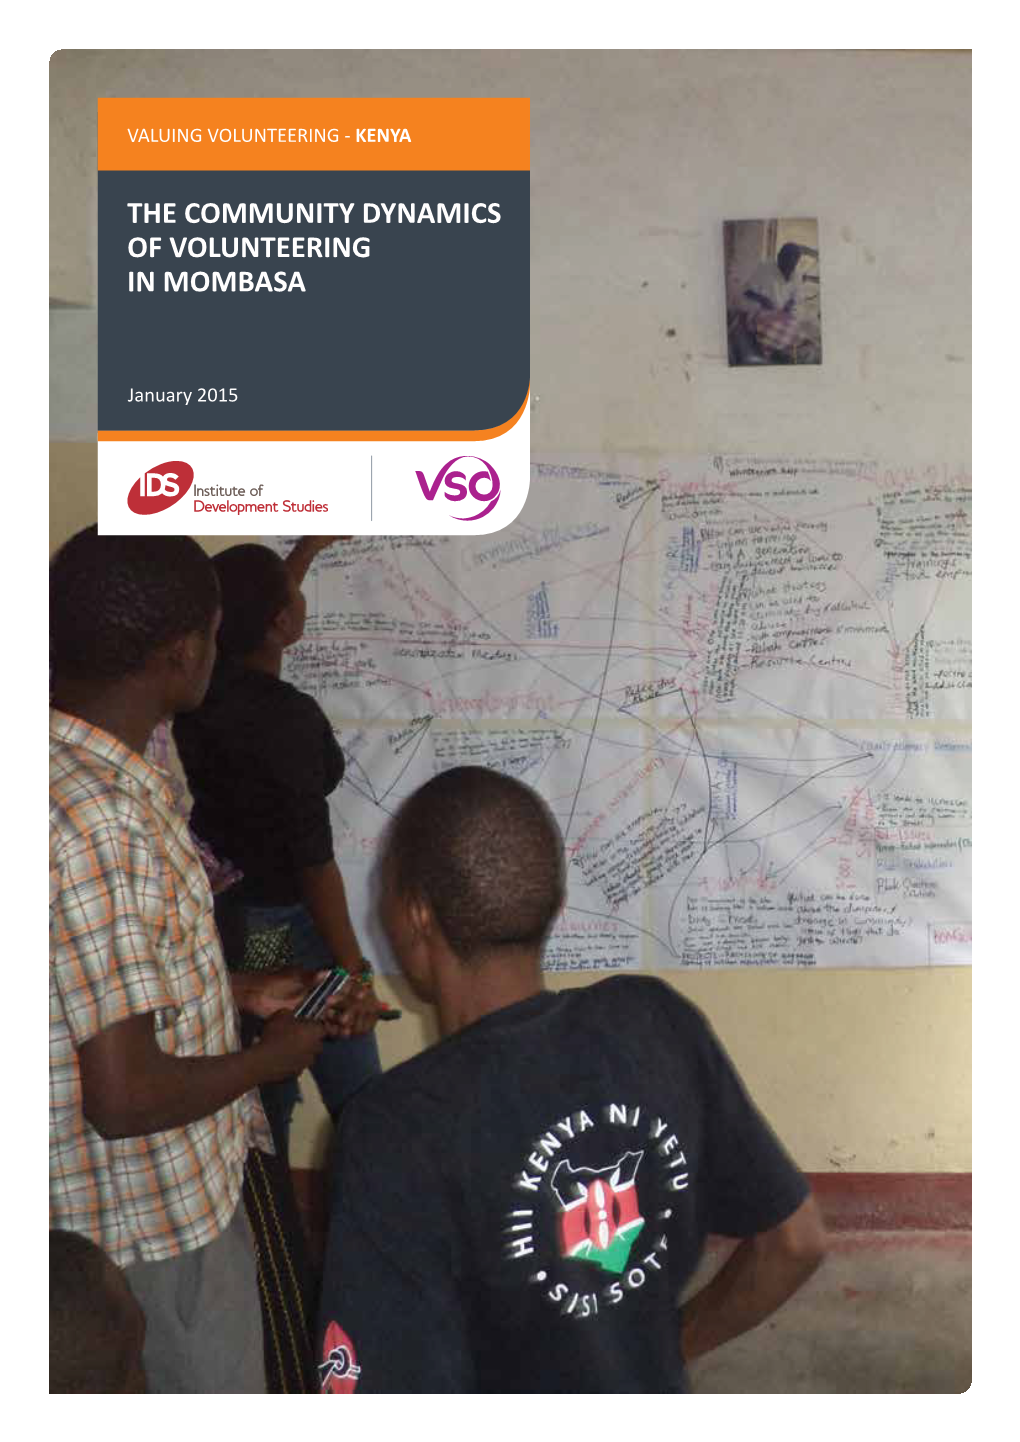 The Community Dynamics of Volunteering in Mombasa